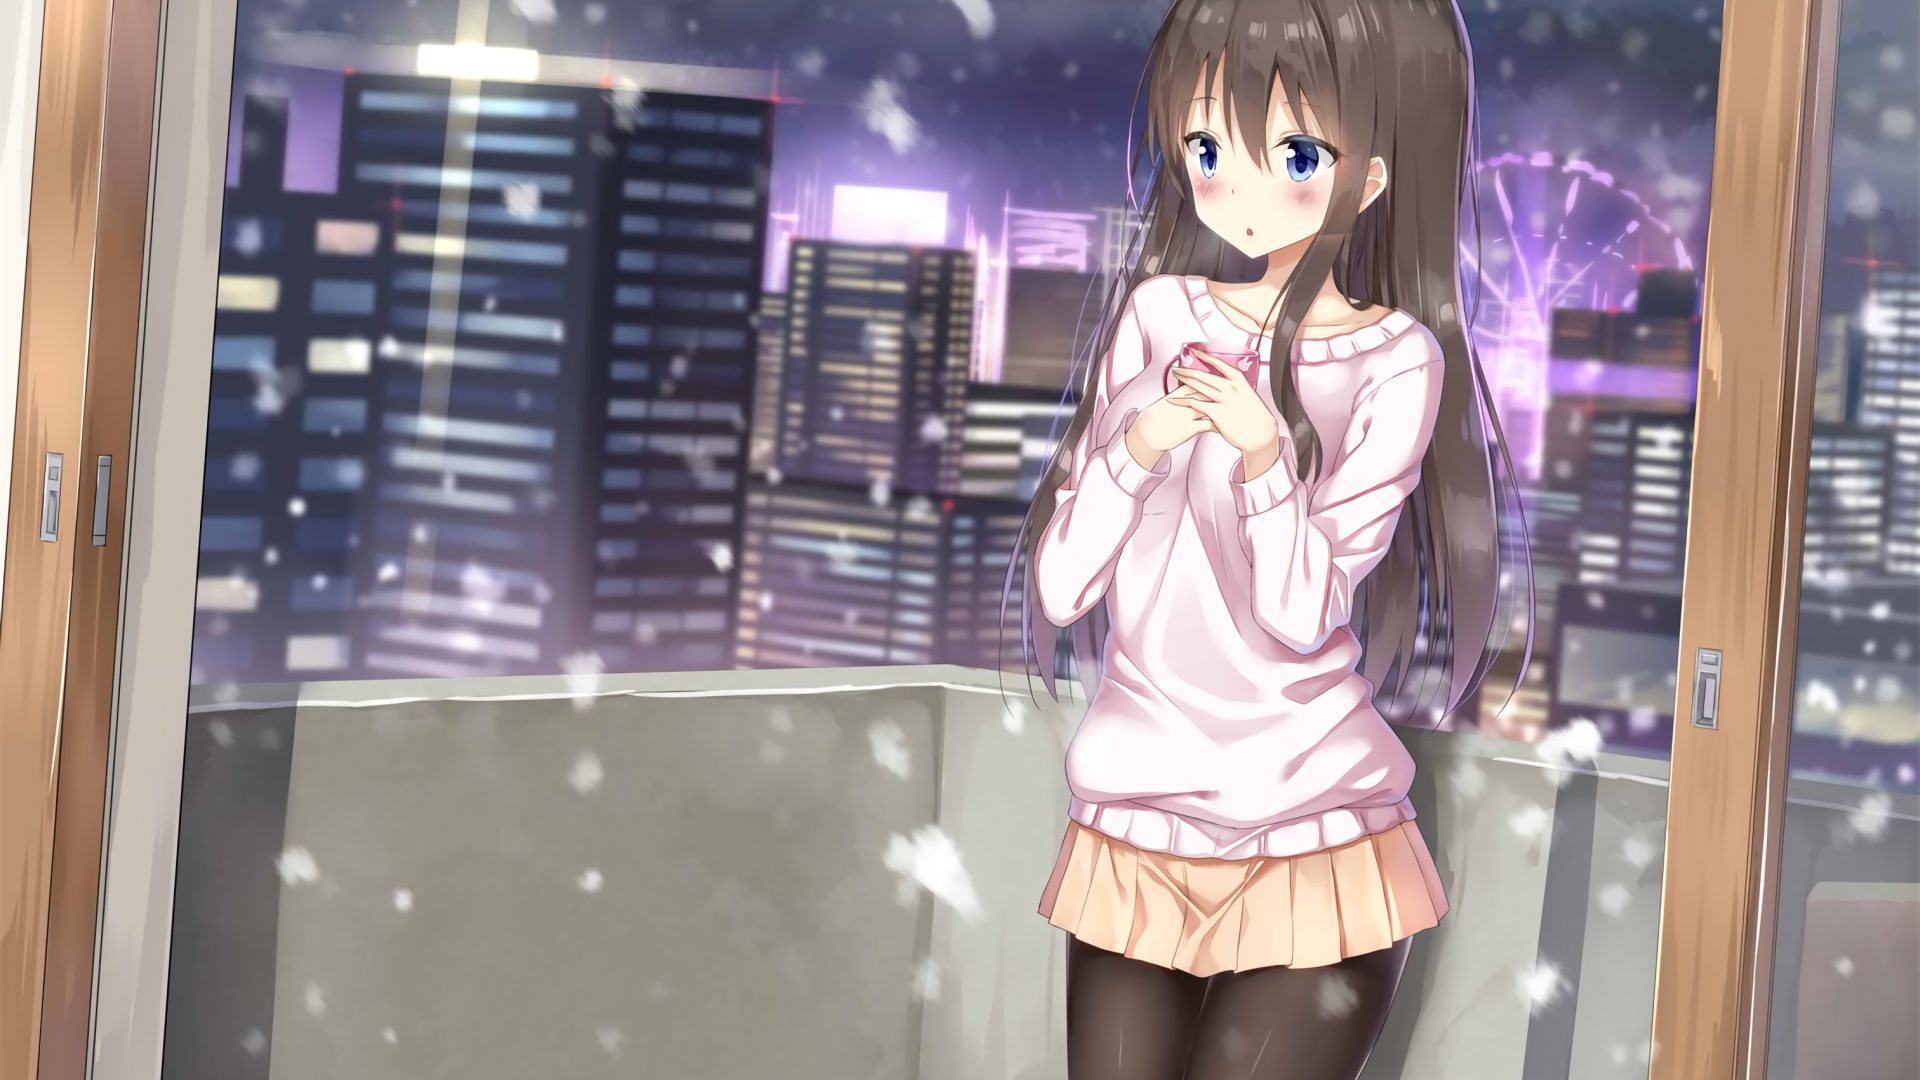 Desktop Wallpaper Cute Long Hair Anime Girl Enjoying Snow Fall, HD Image, Picture, Background, R Lq5g